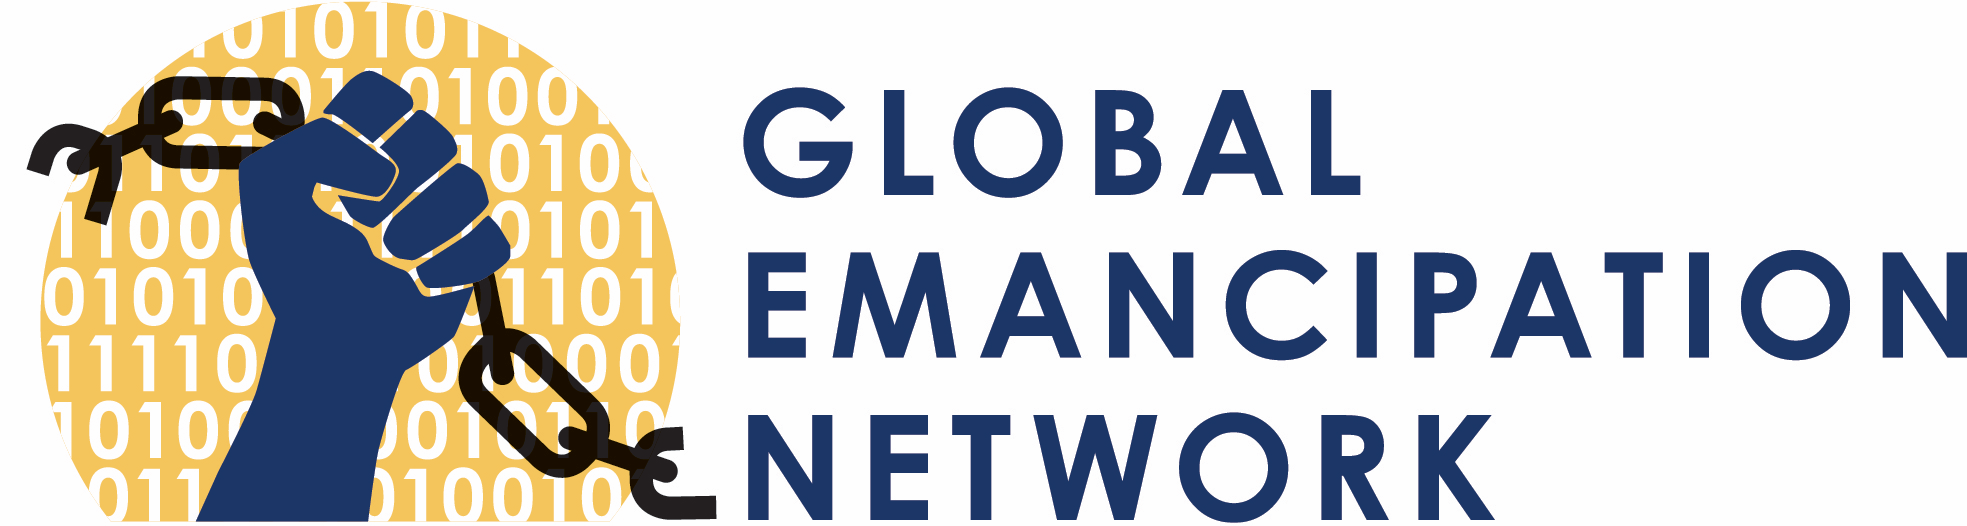 Global emancipation network